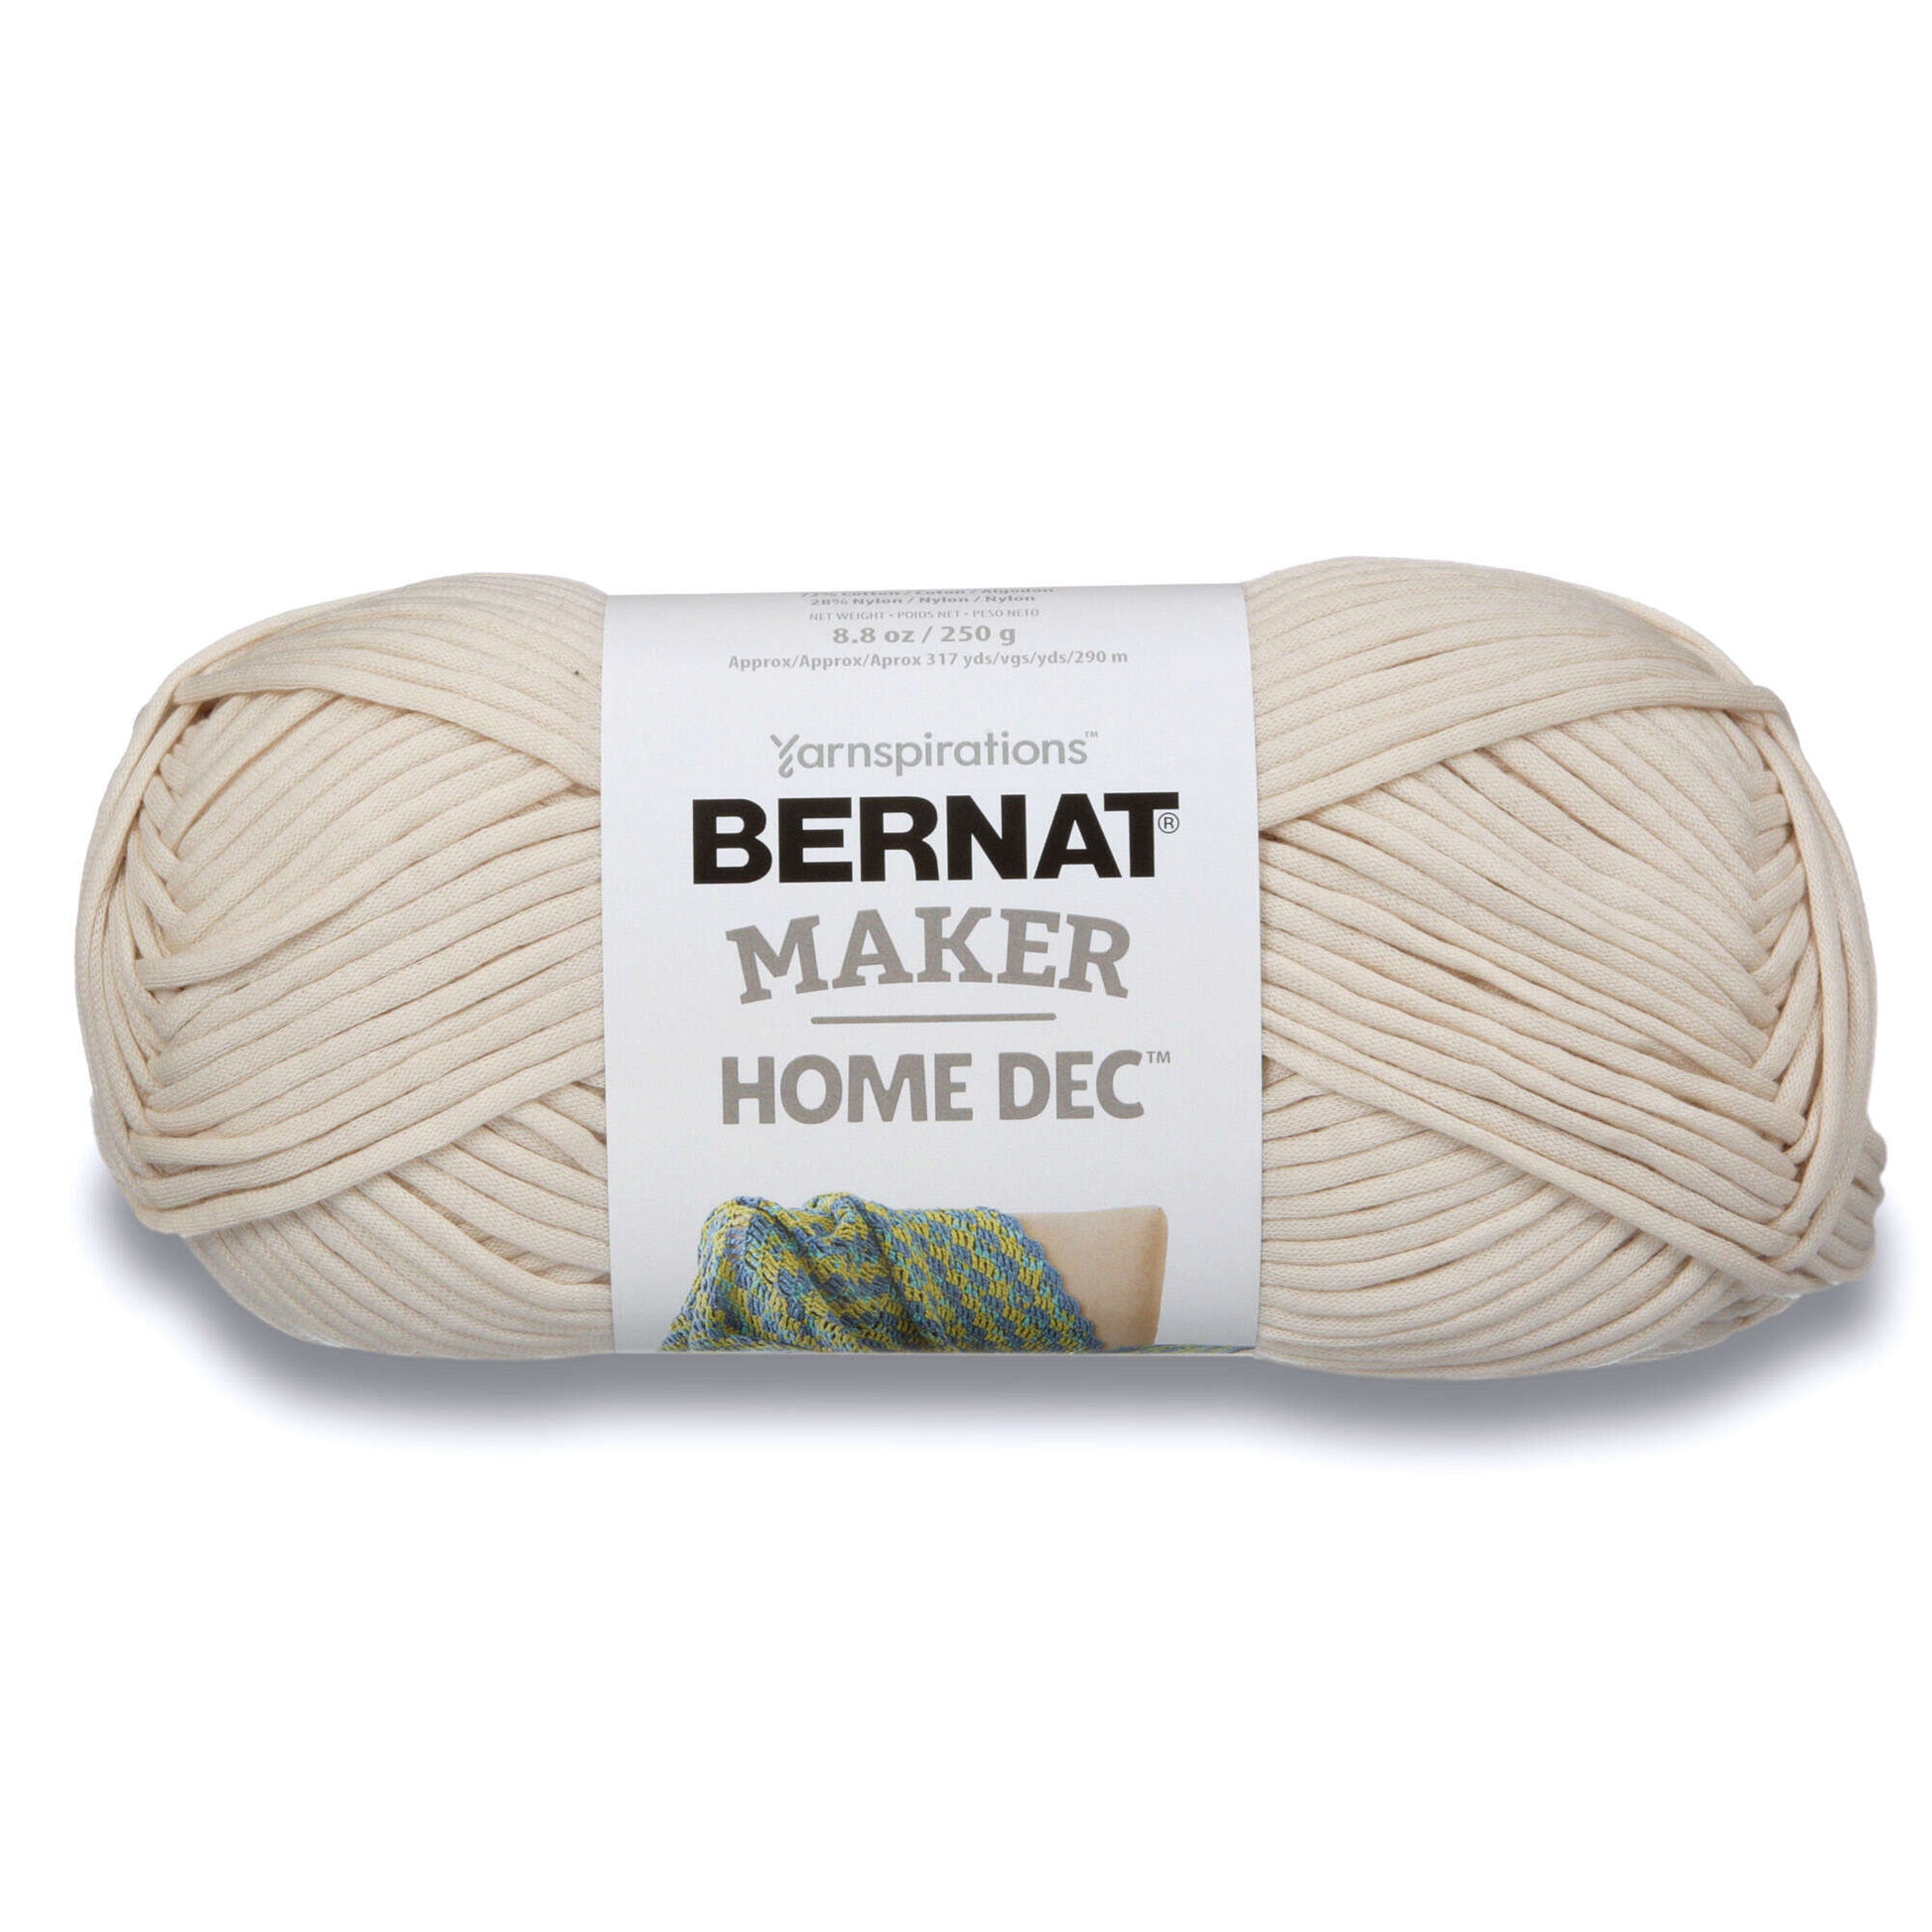 Bindertek Bernat Maker Home Dec Nautical Varg Yarn - 2 Pack of 250g/8.8oz -  Cotton - 5 Bulky - 317 Yards - Knitting/Crochet, Pink